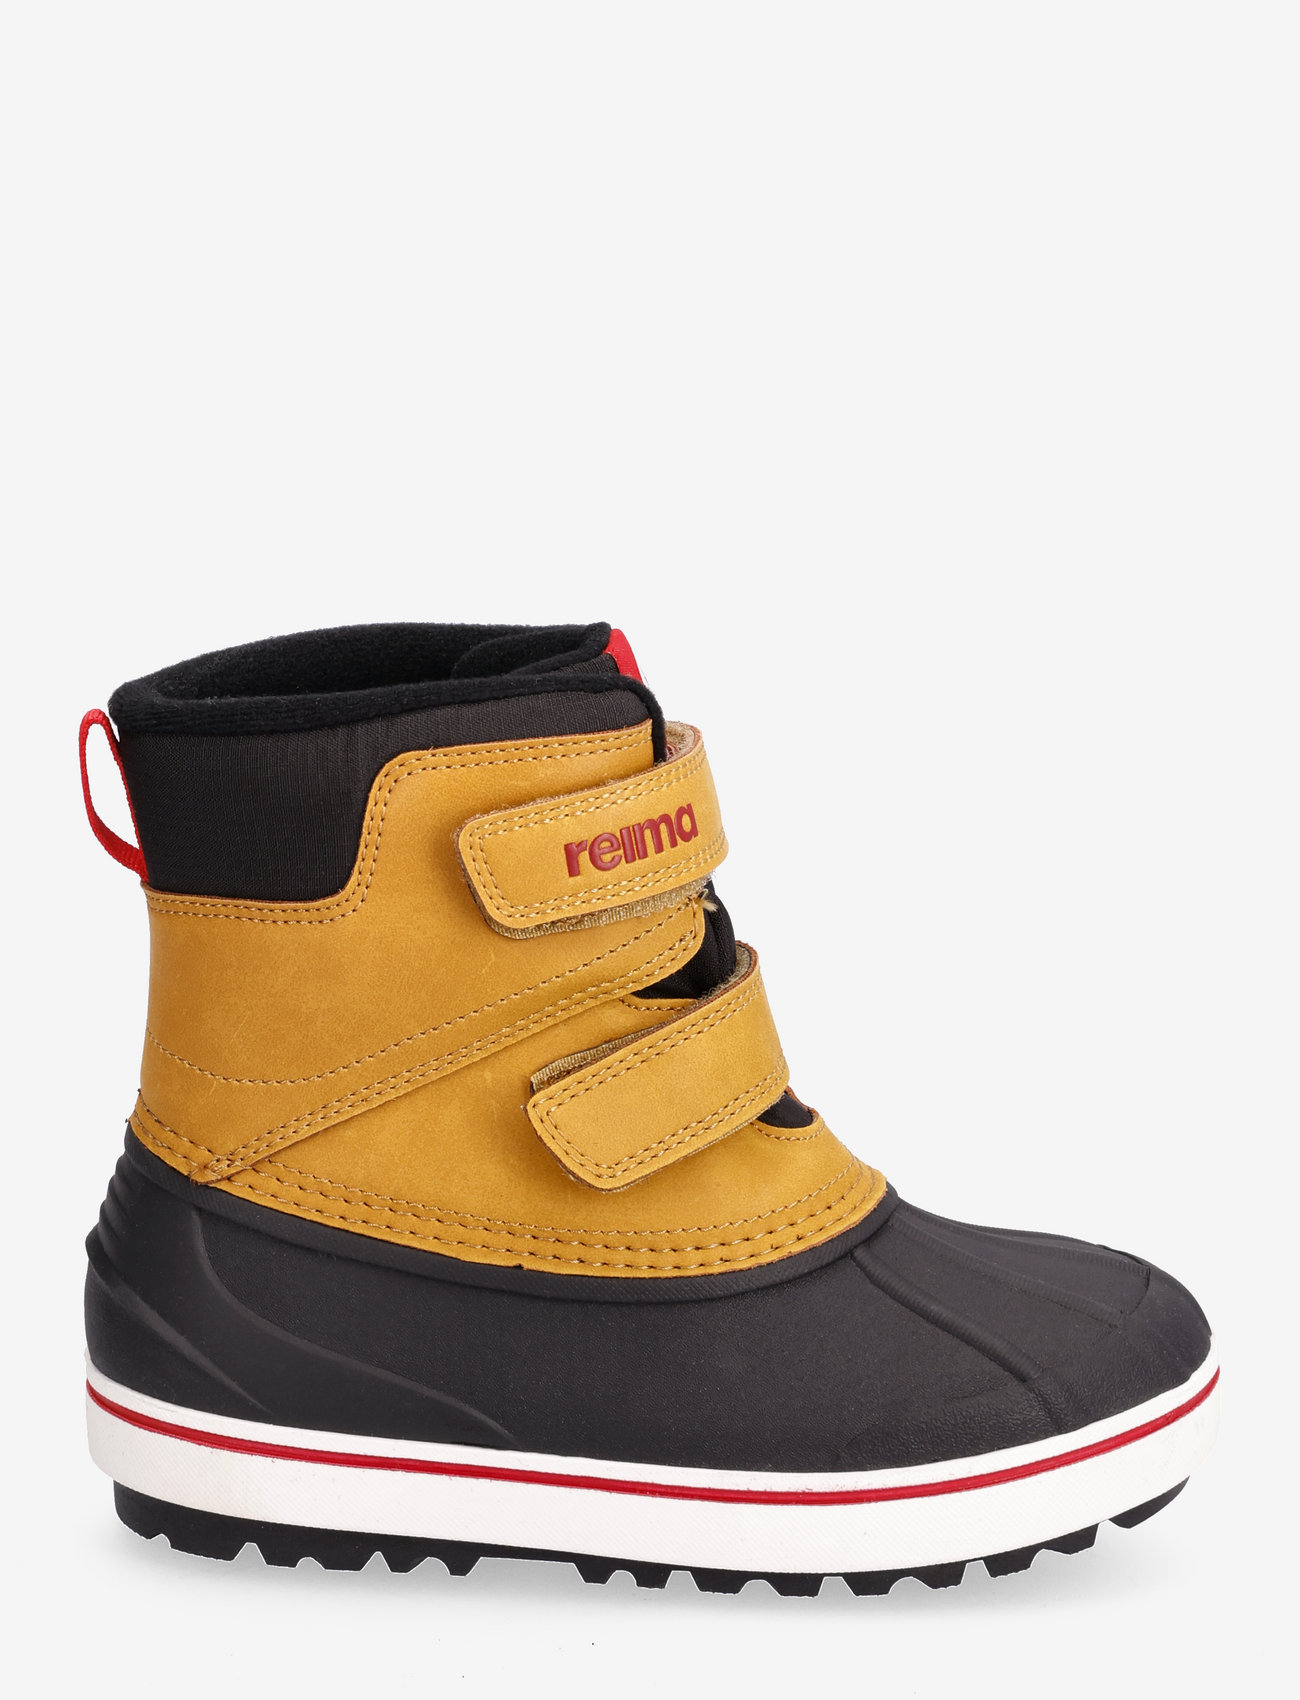 Reima - Winter boots, Coconi - børn - ochre yellow - 1